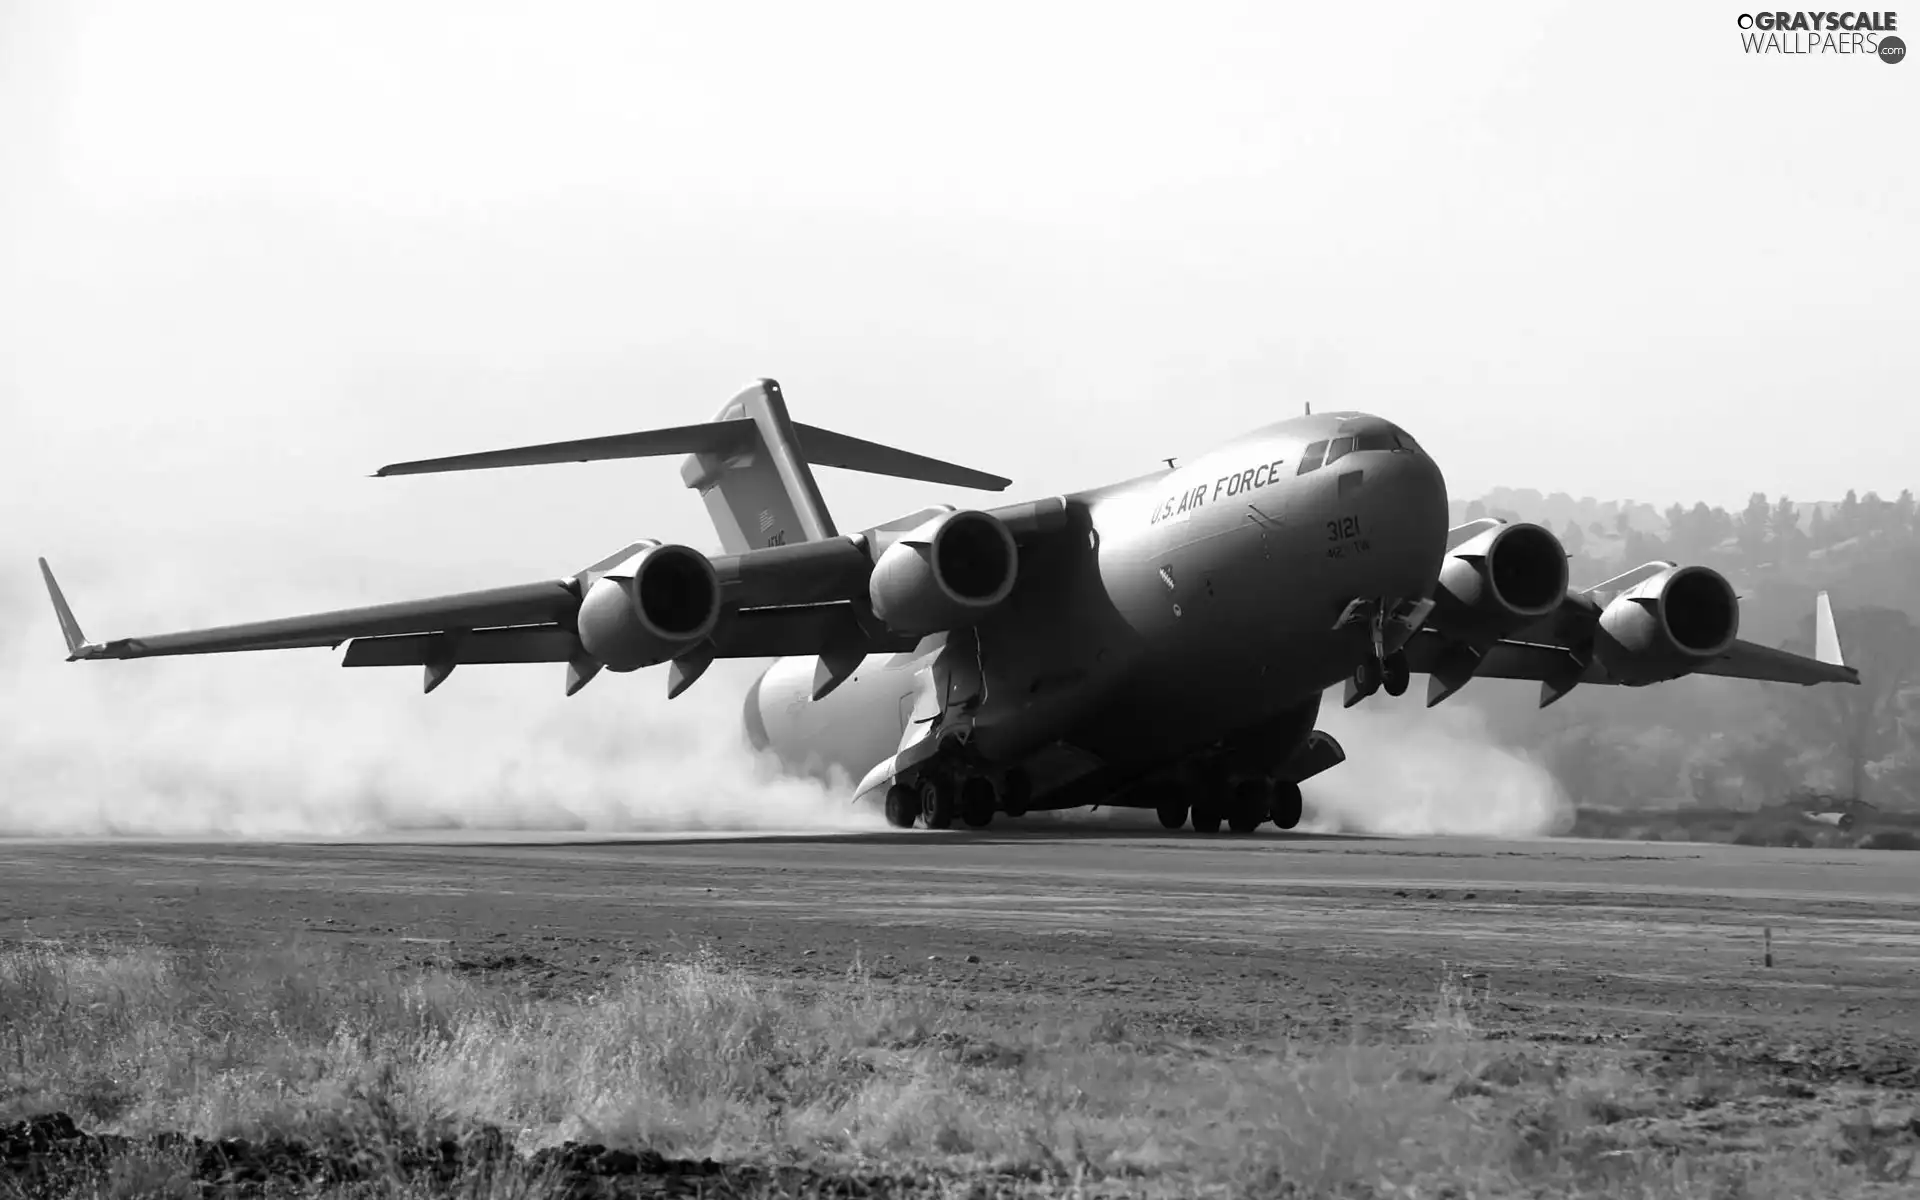 landing, troop-carrier, Boeing C-17 Globemaster III, dust